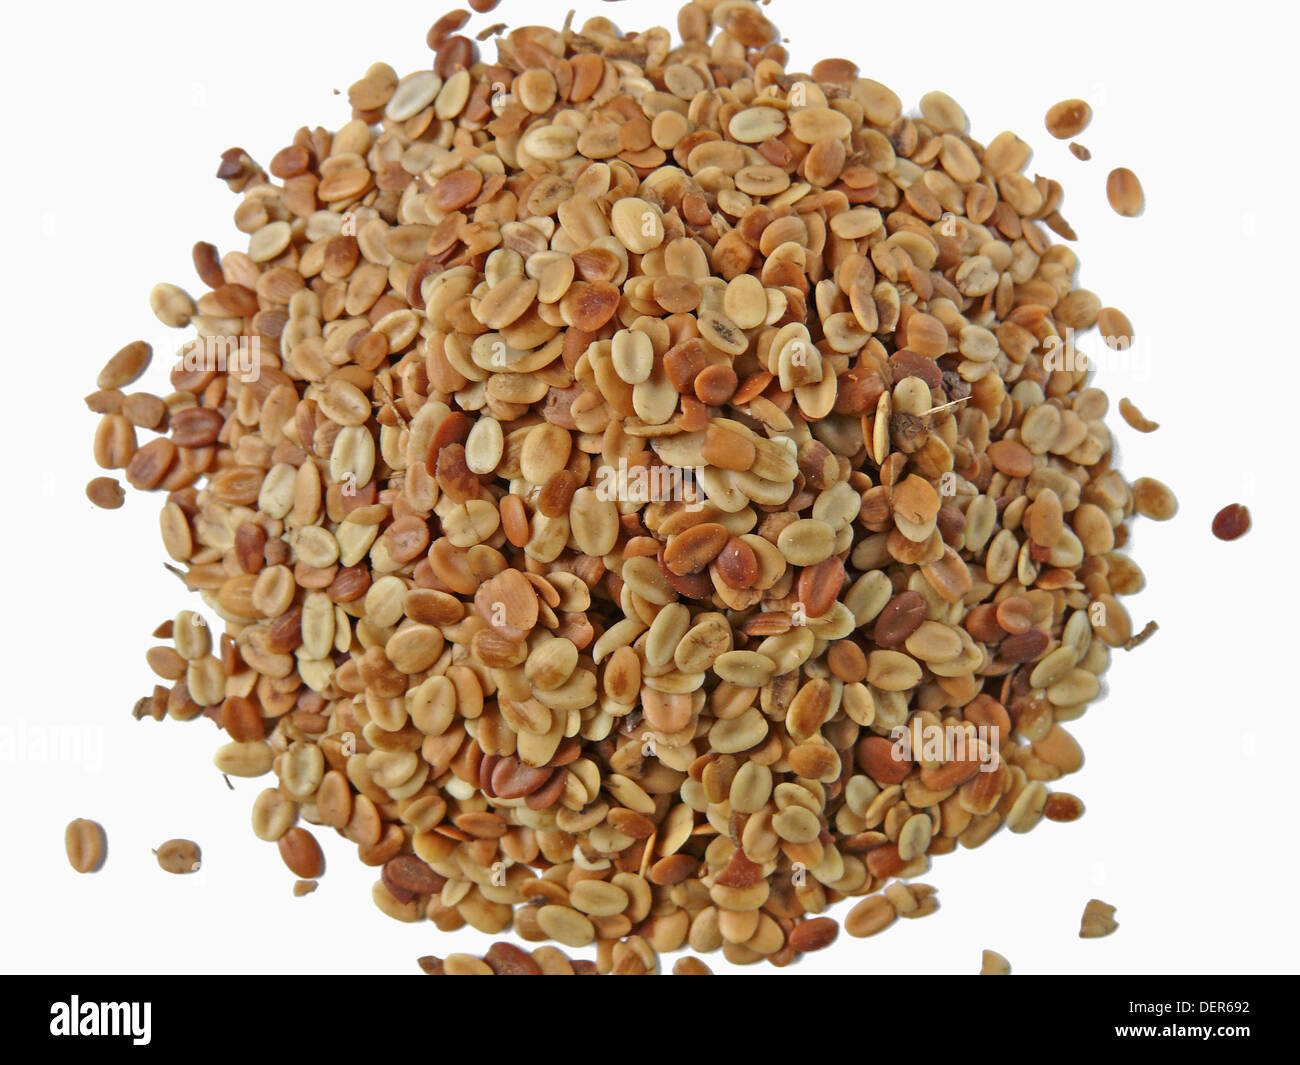 roasted coriander seeds (coriandrum sativum) also commonly